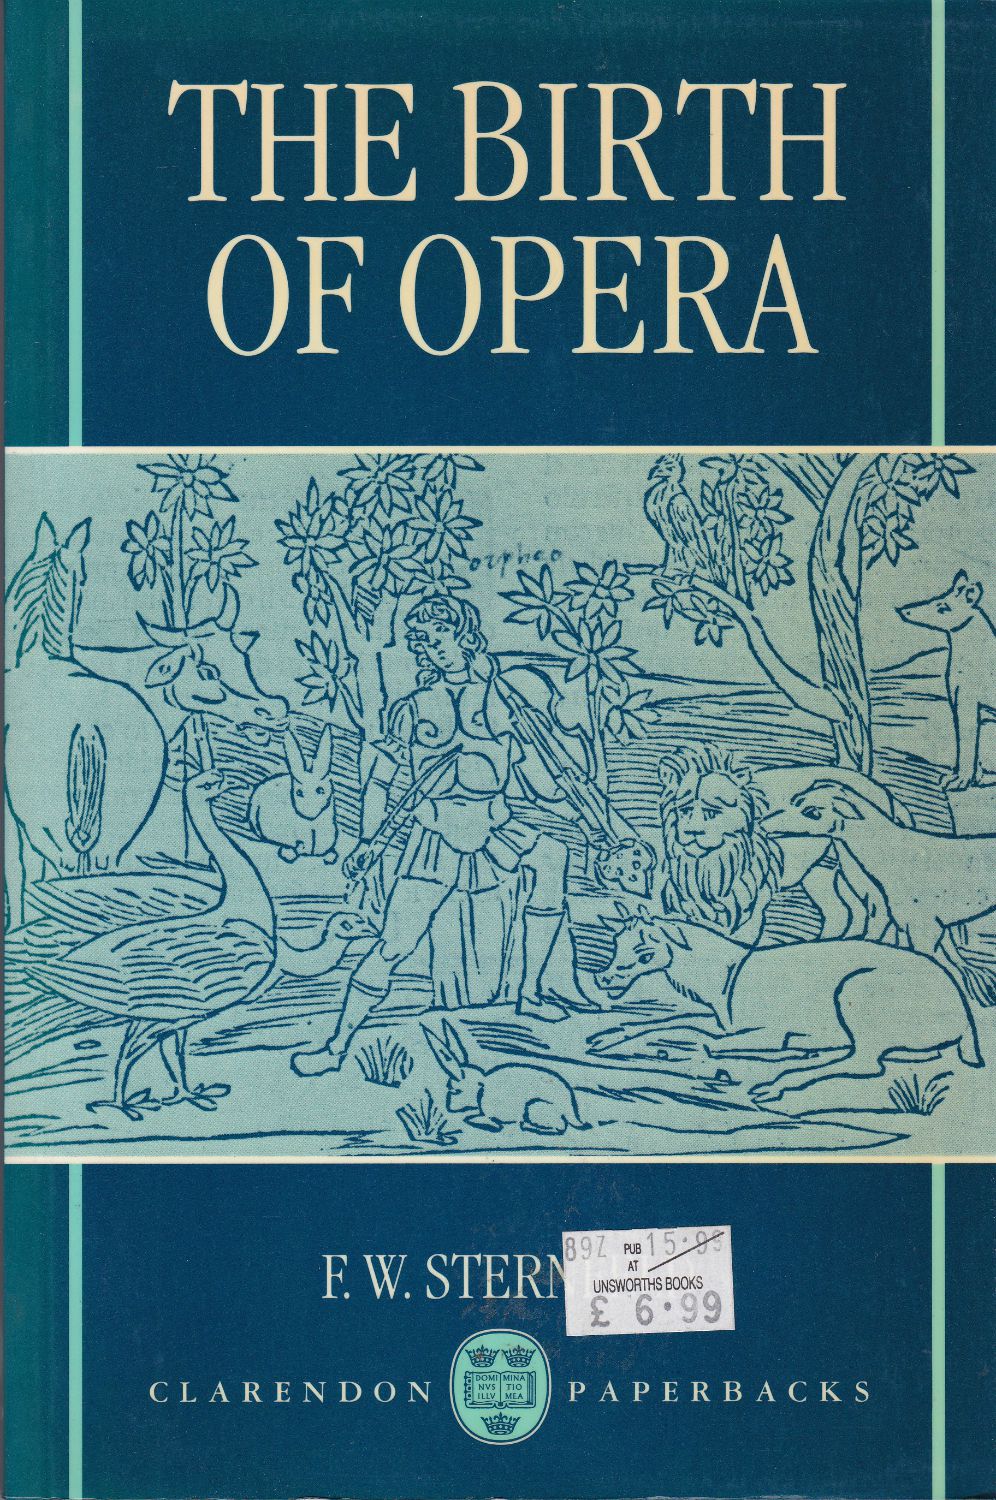 The birth of opera.